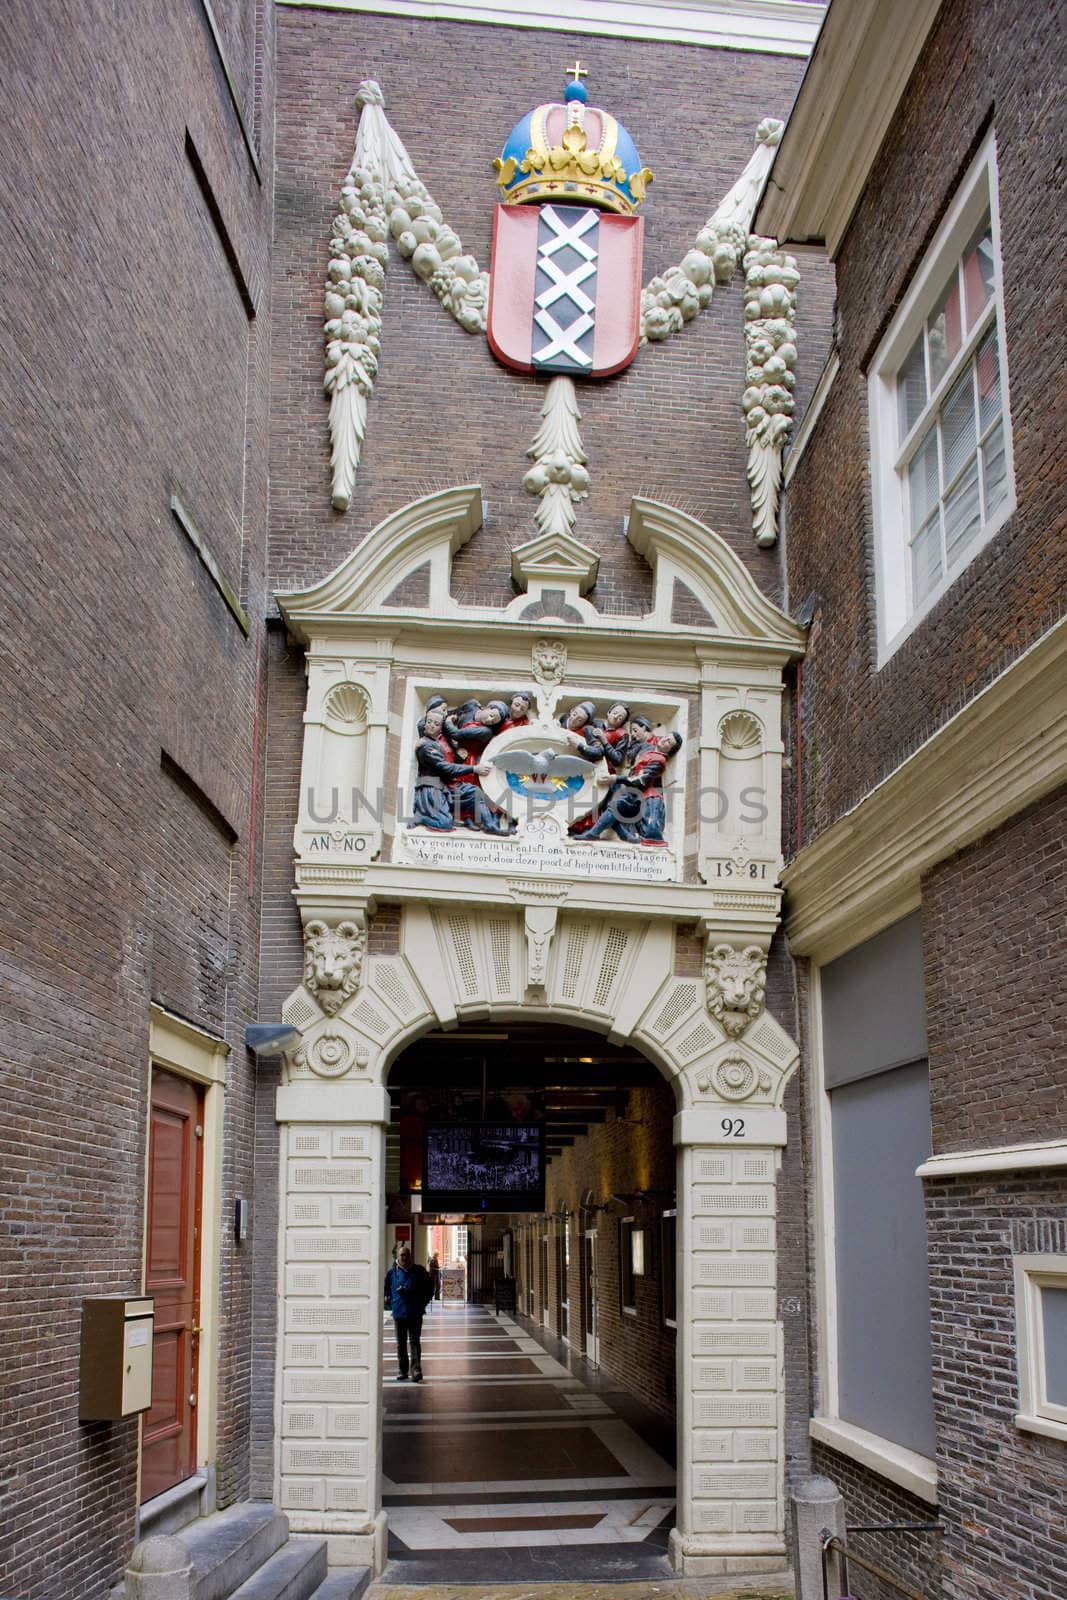 Museum of History (Amsterdams Historisch Museum), Amsterdam, Net by phbcz